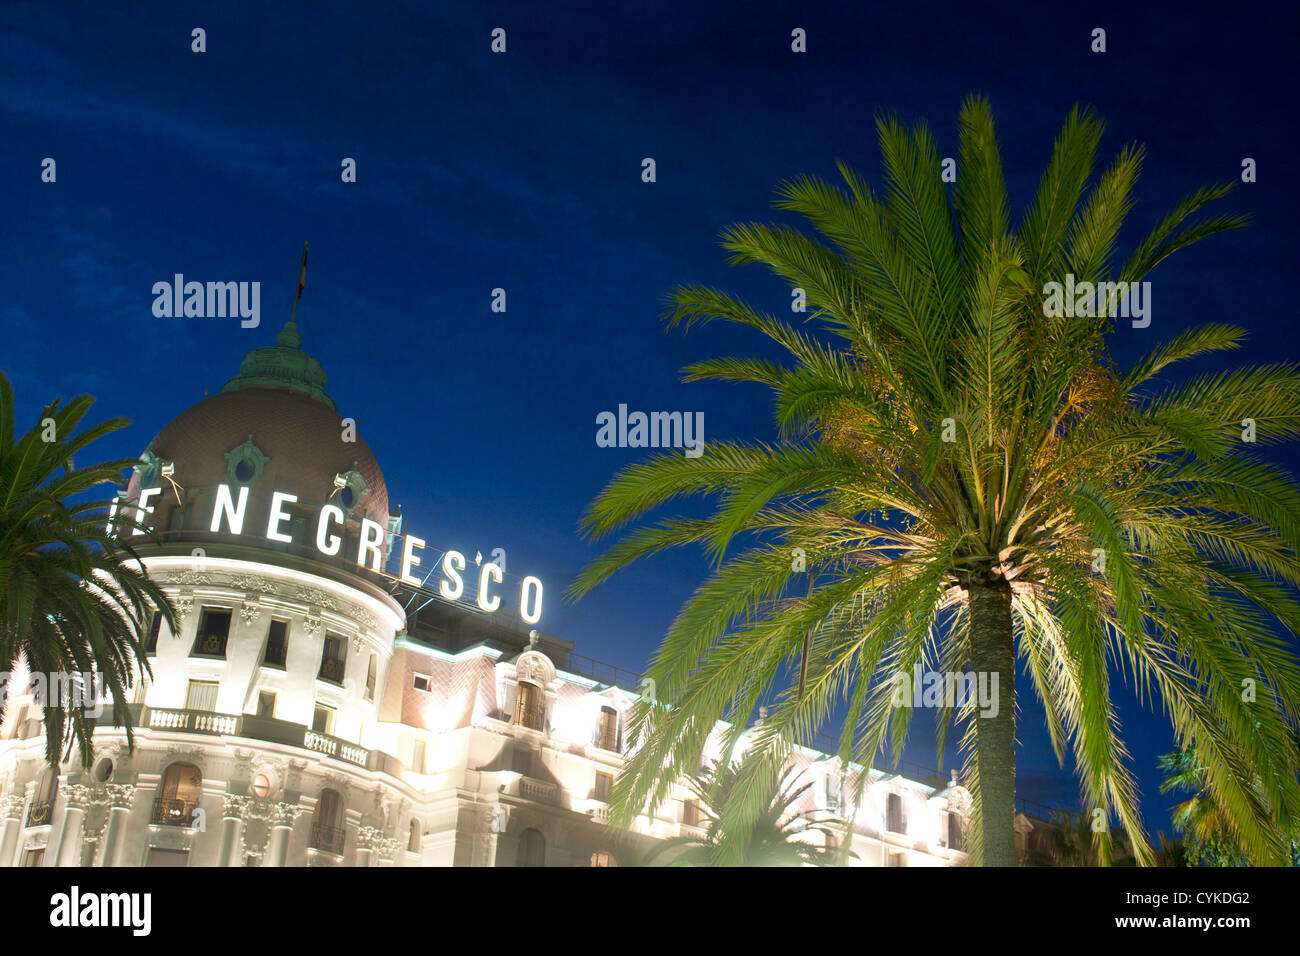 Hotel Le Negresco und Palm-Baum in der Nacht Masséna Nizza Cote d ' Azur Alpes-Maritimes Provence Frankreich Stockfoto